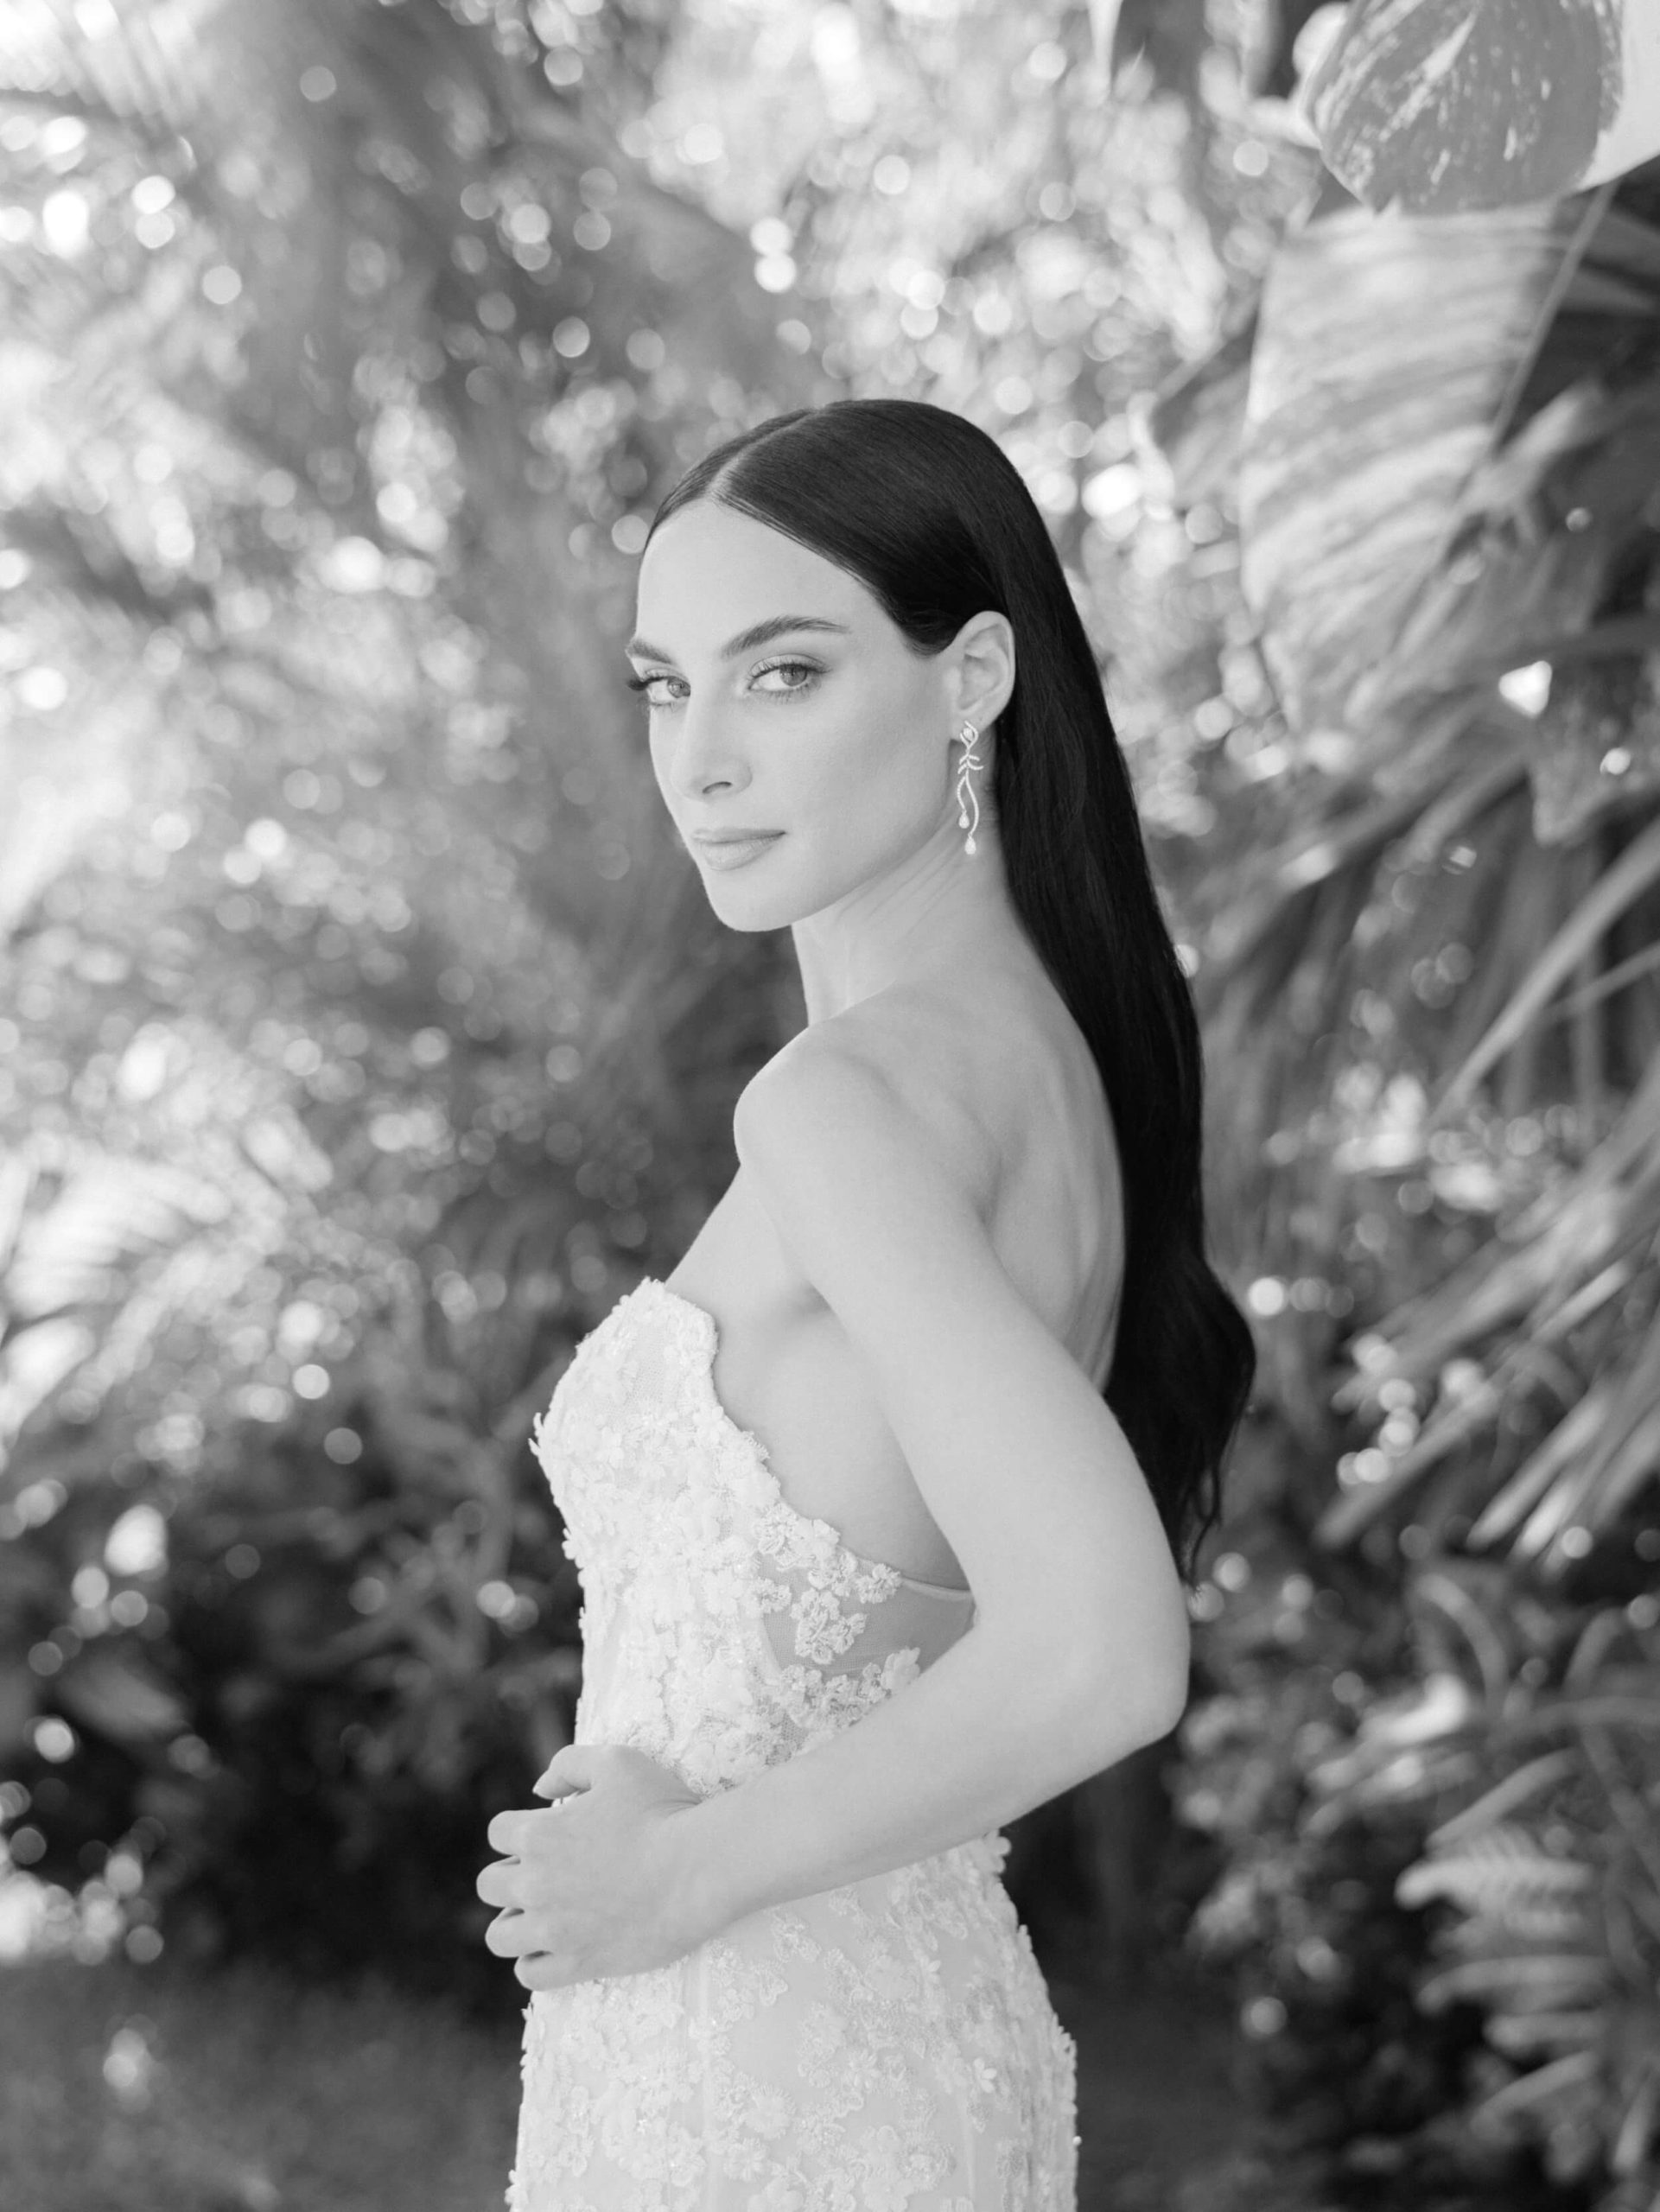 Danielle posing in her wedding dress